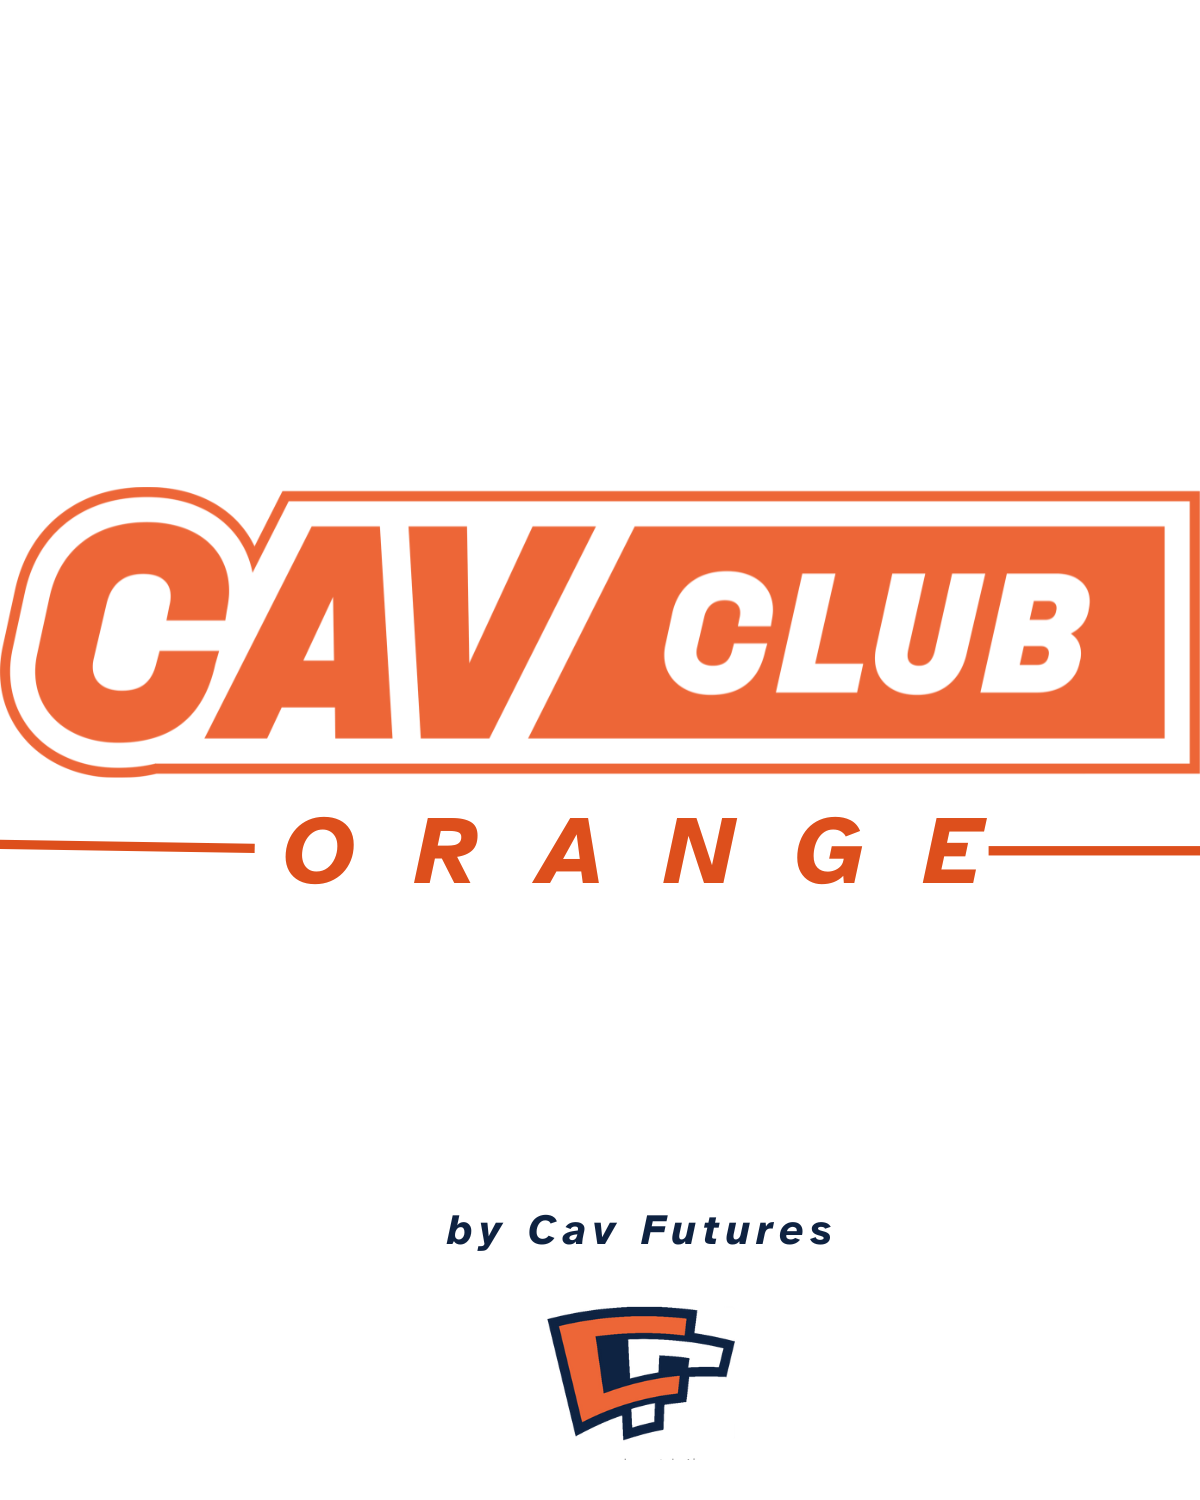 Cav Club Orange